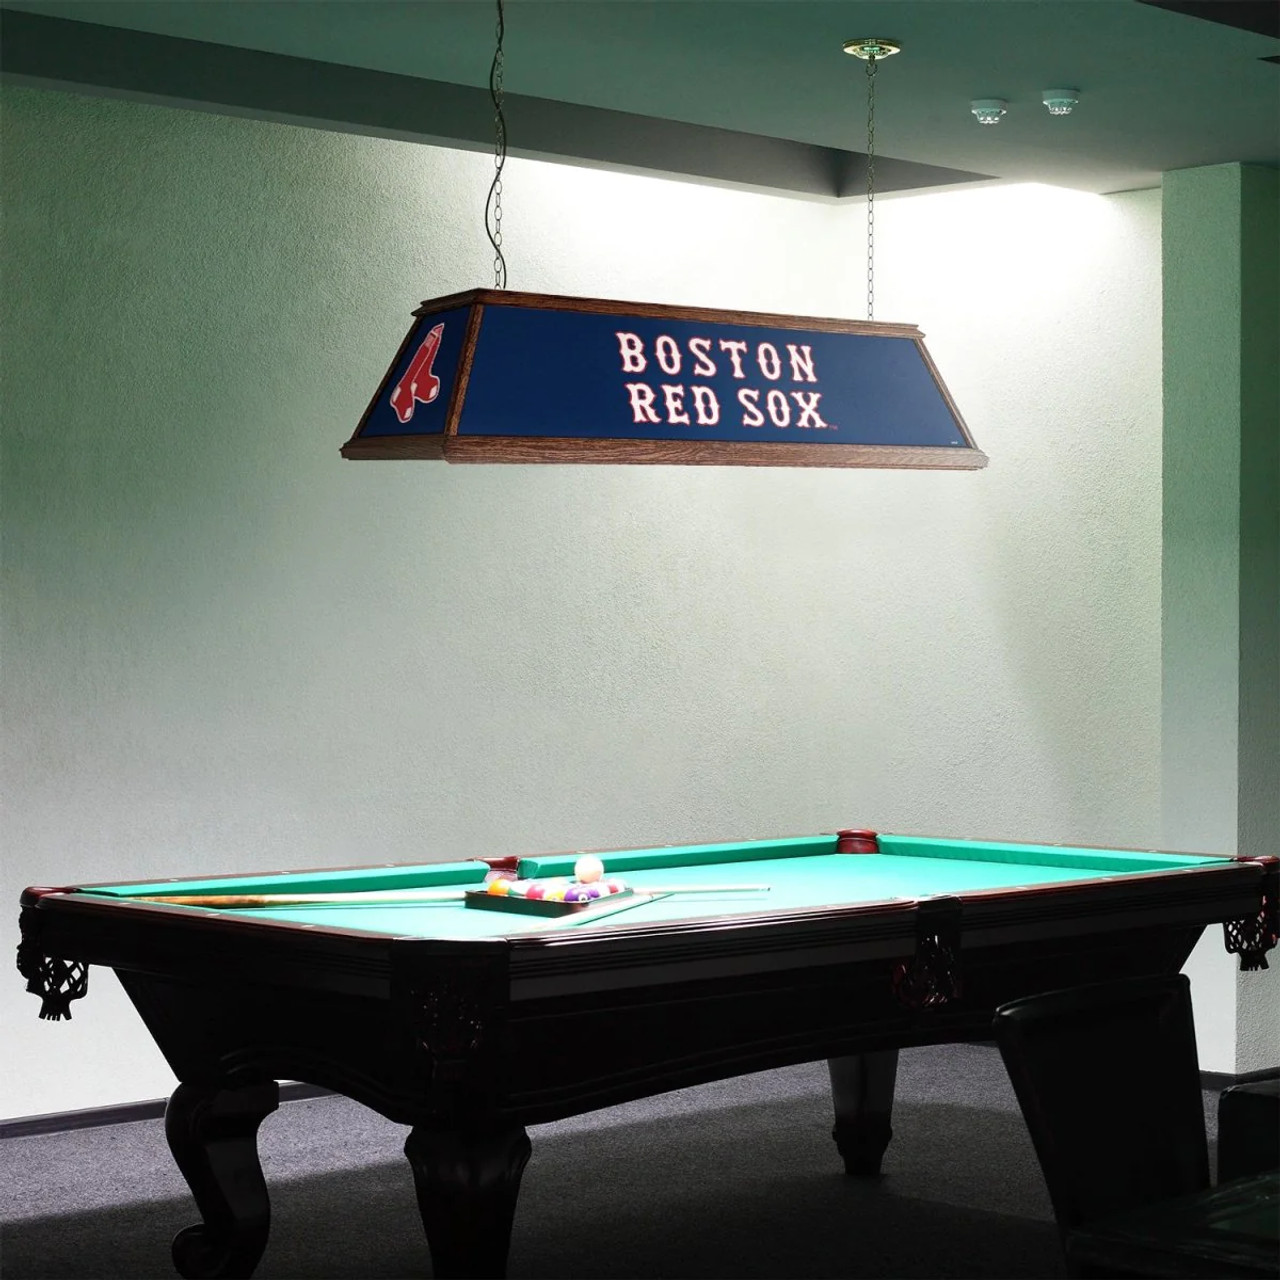 Boston Red Sox: Premium Wood Pool Table Light "B" Version